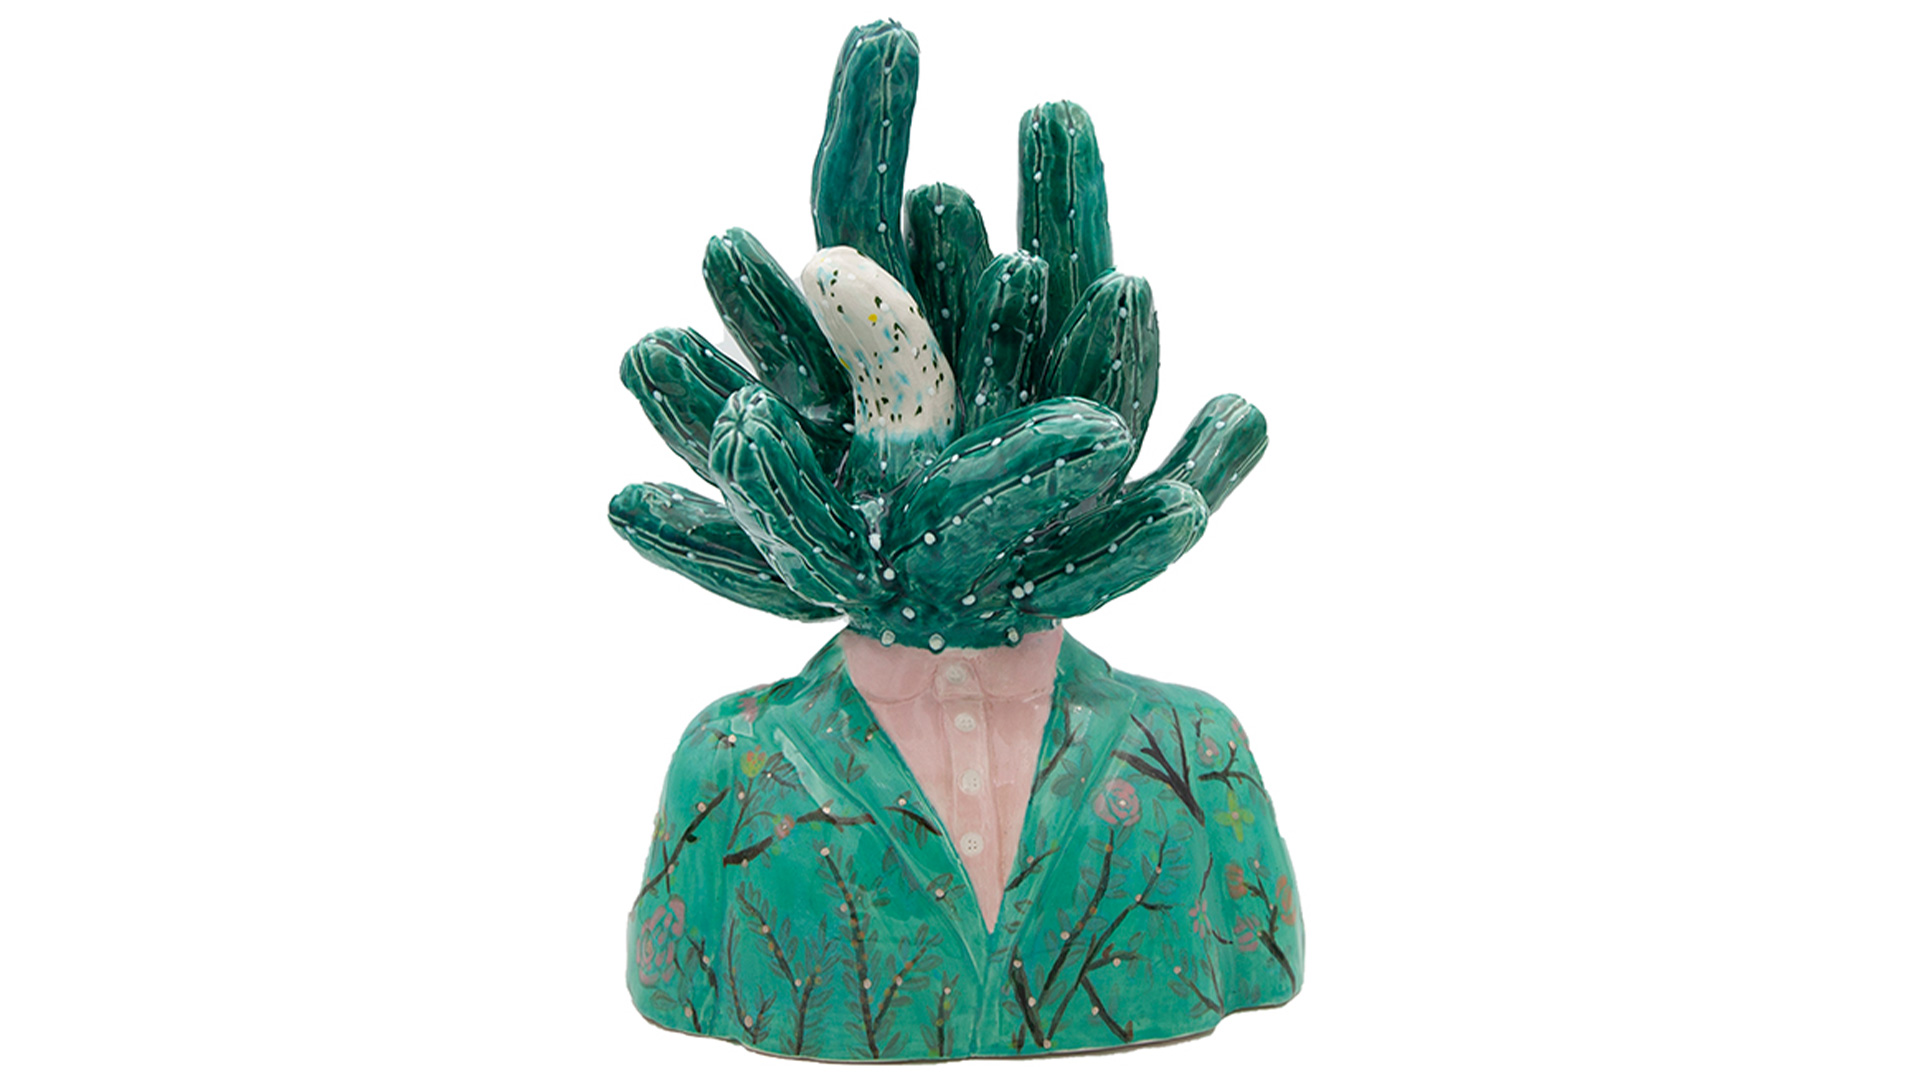 Sculptures from Hybrid Plants with Artist Saliha Yılmaz